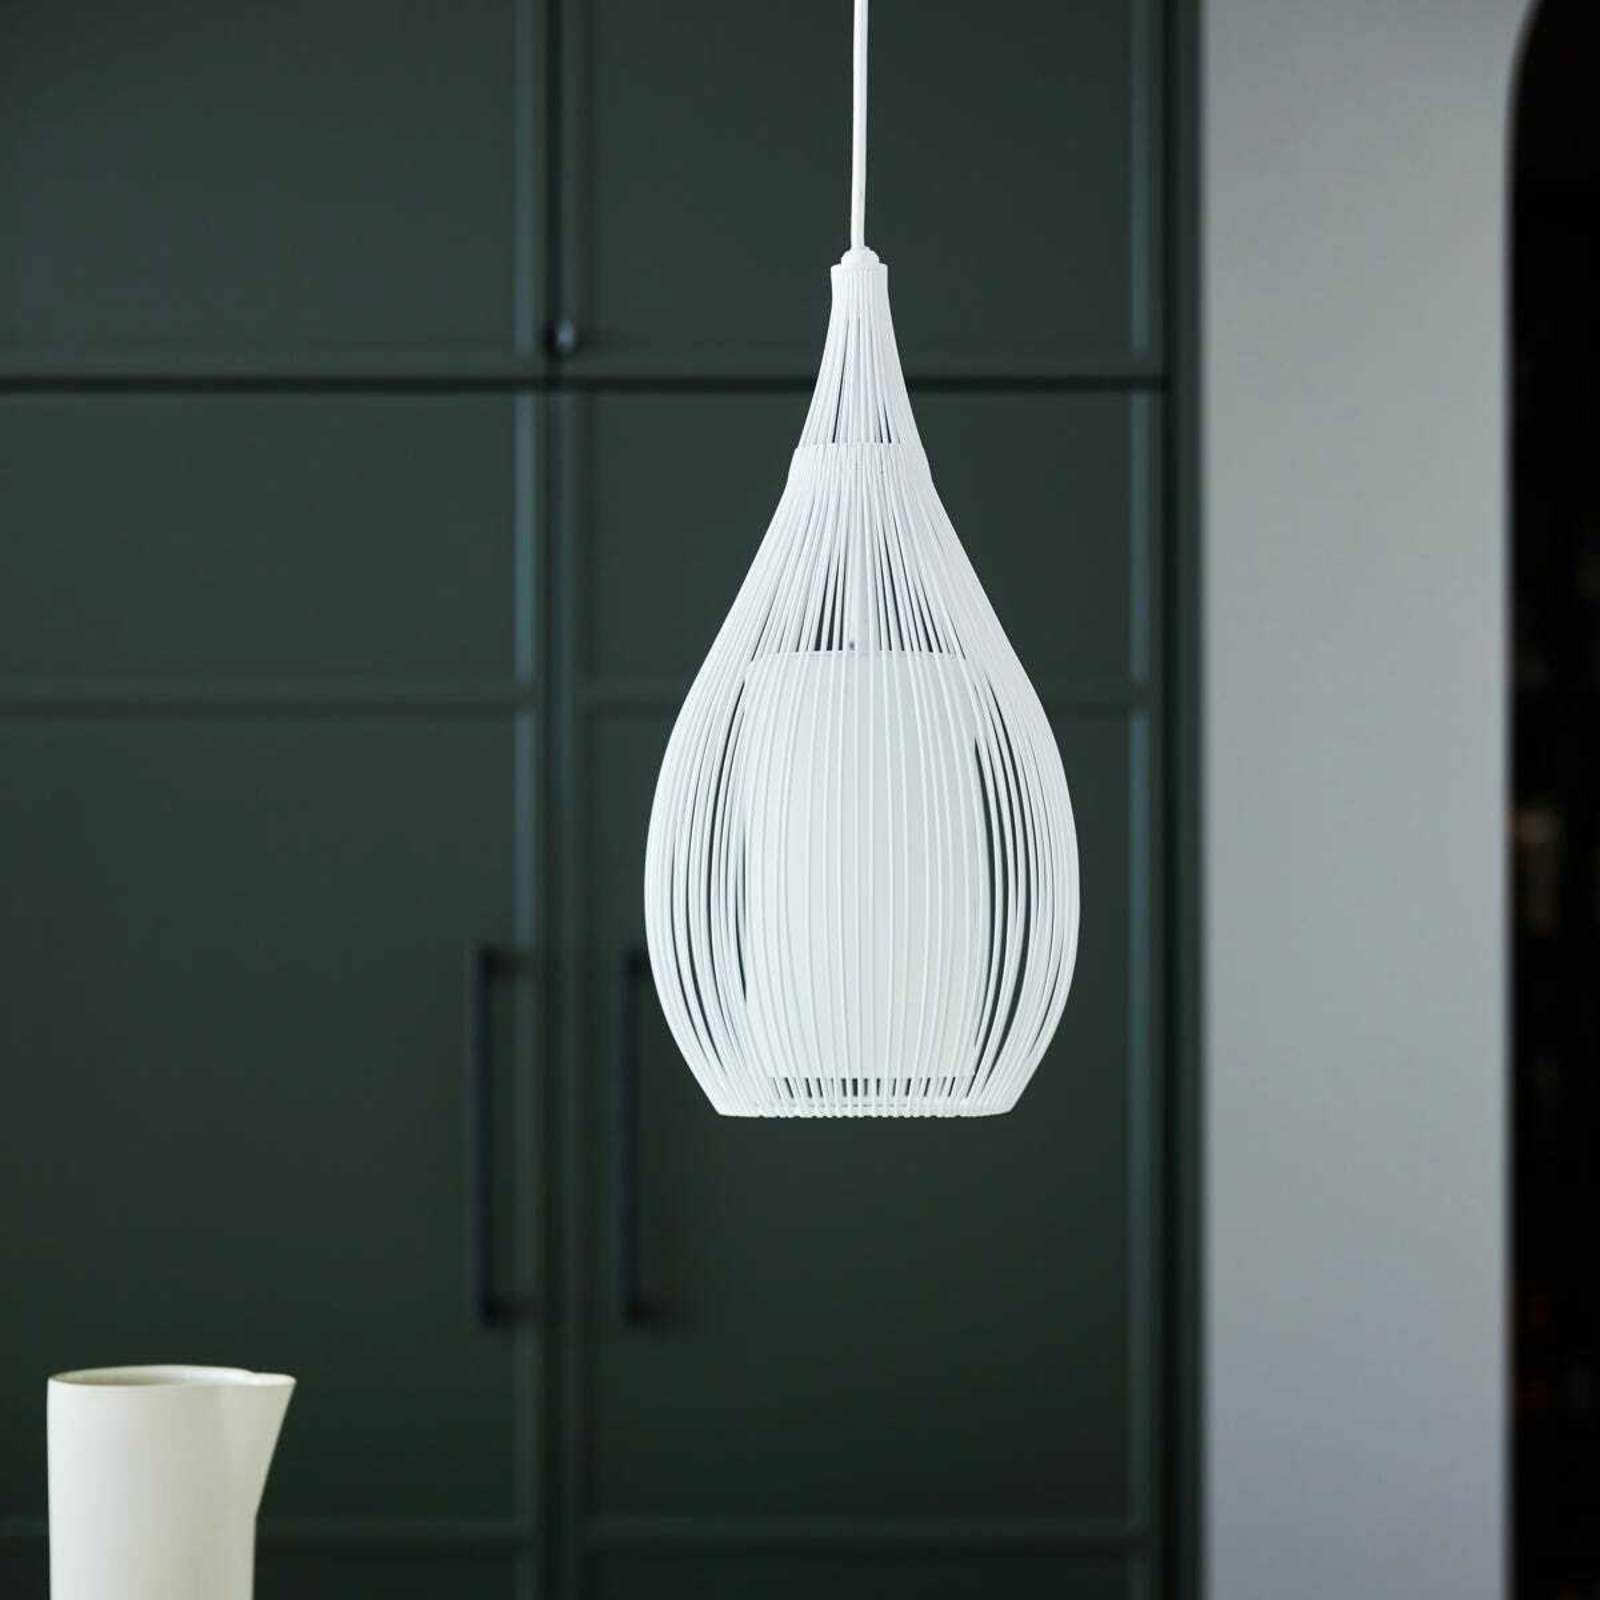 Beacon hanglamp Solis, wit, metaal, glas, Ø 19 cm